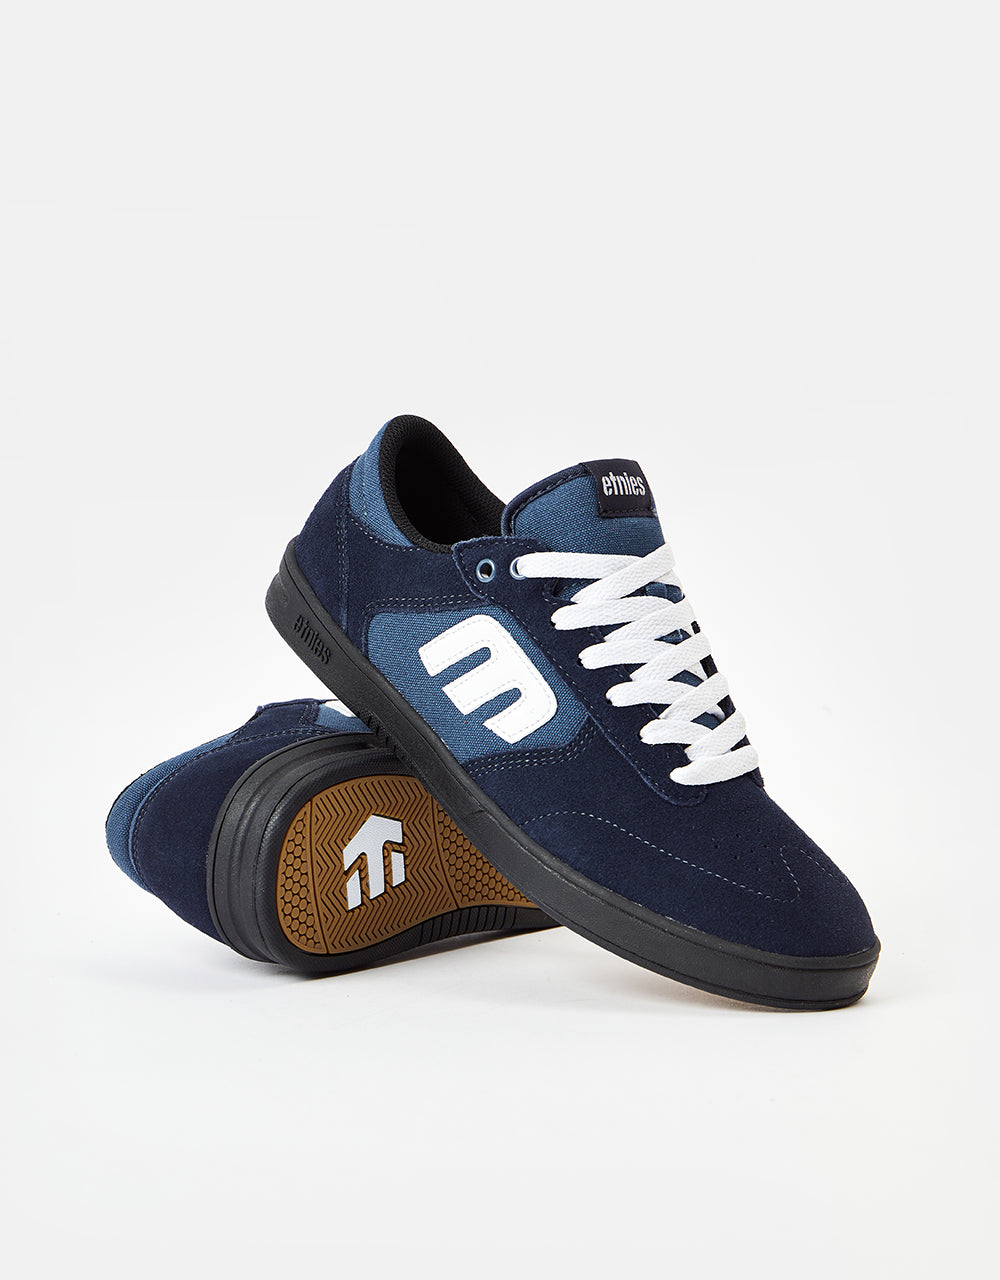 Etnies Windrow Skate Shoes - Navy/Blue/White